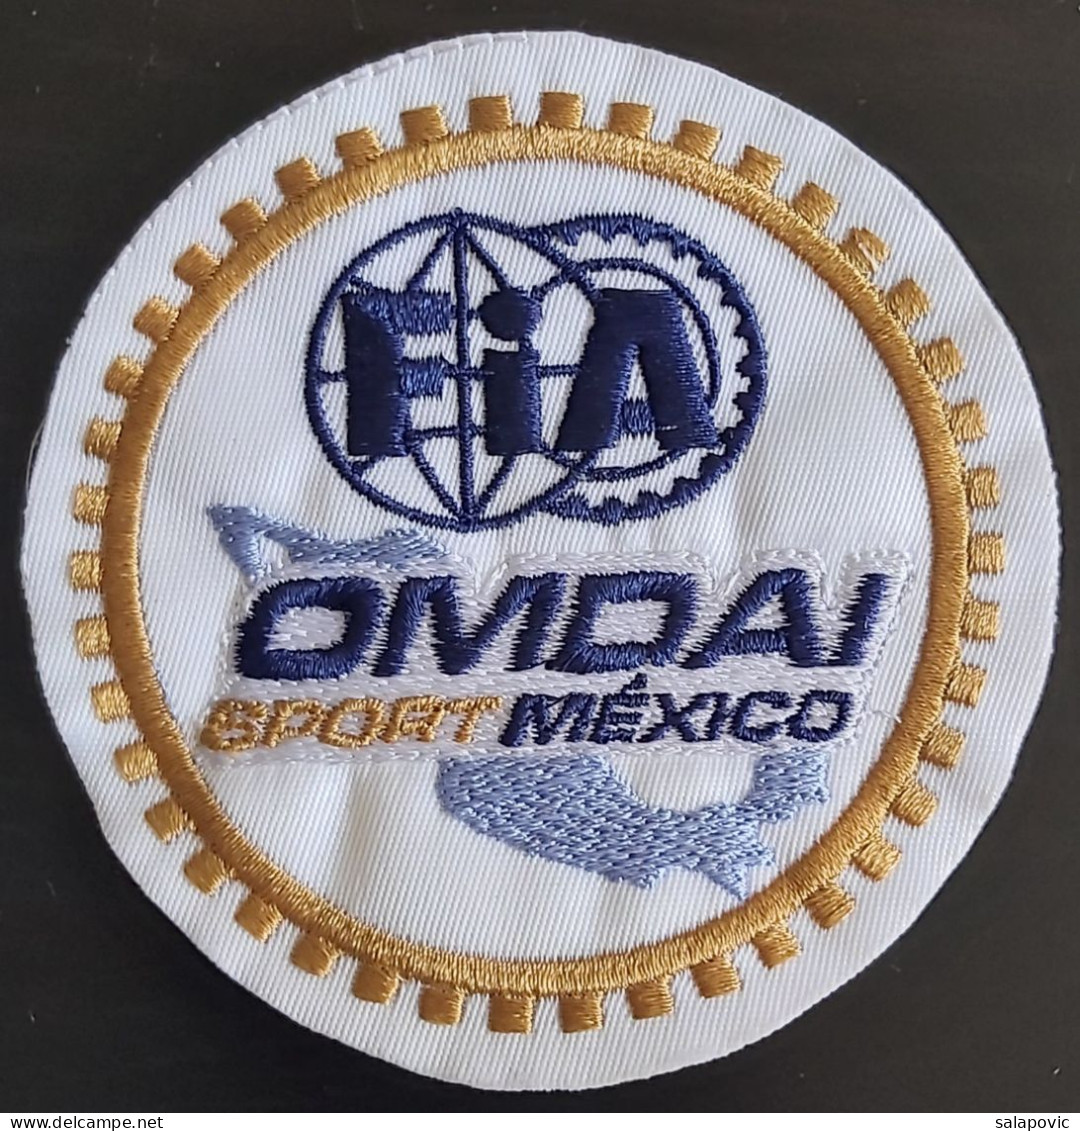 OMDAI SPORT MEXICO (FIA)  Patch - Car Racing - F1